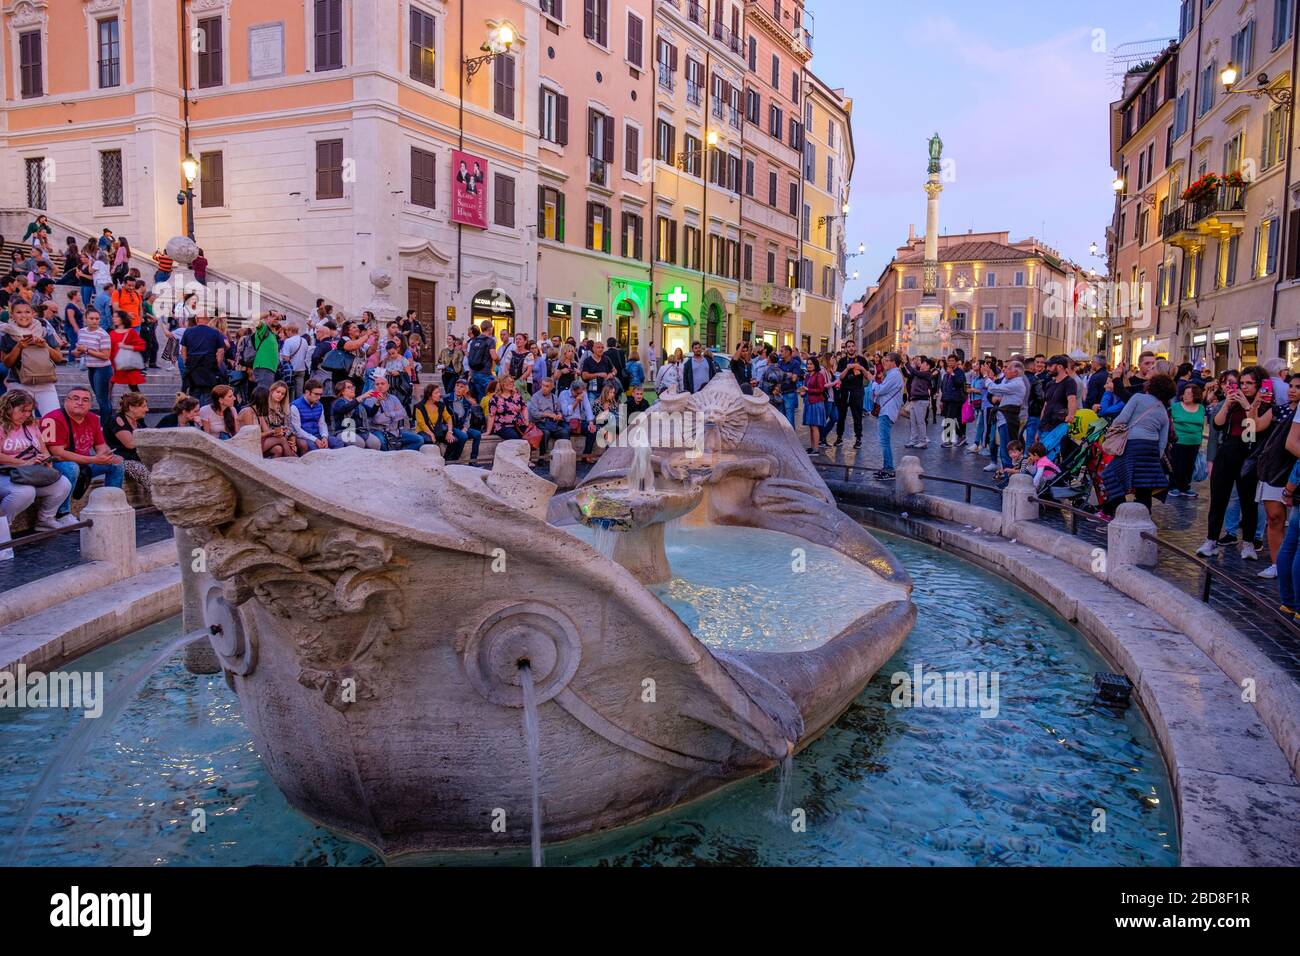 Overtourism, mass tourism, crowds of tourists at Piazza di Spagna, Spanish Steps, Fontana della Barcaccia, Rome, Italy. Stock Photo